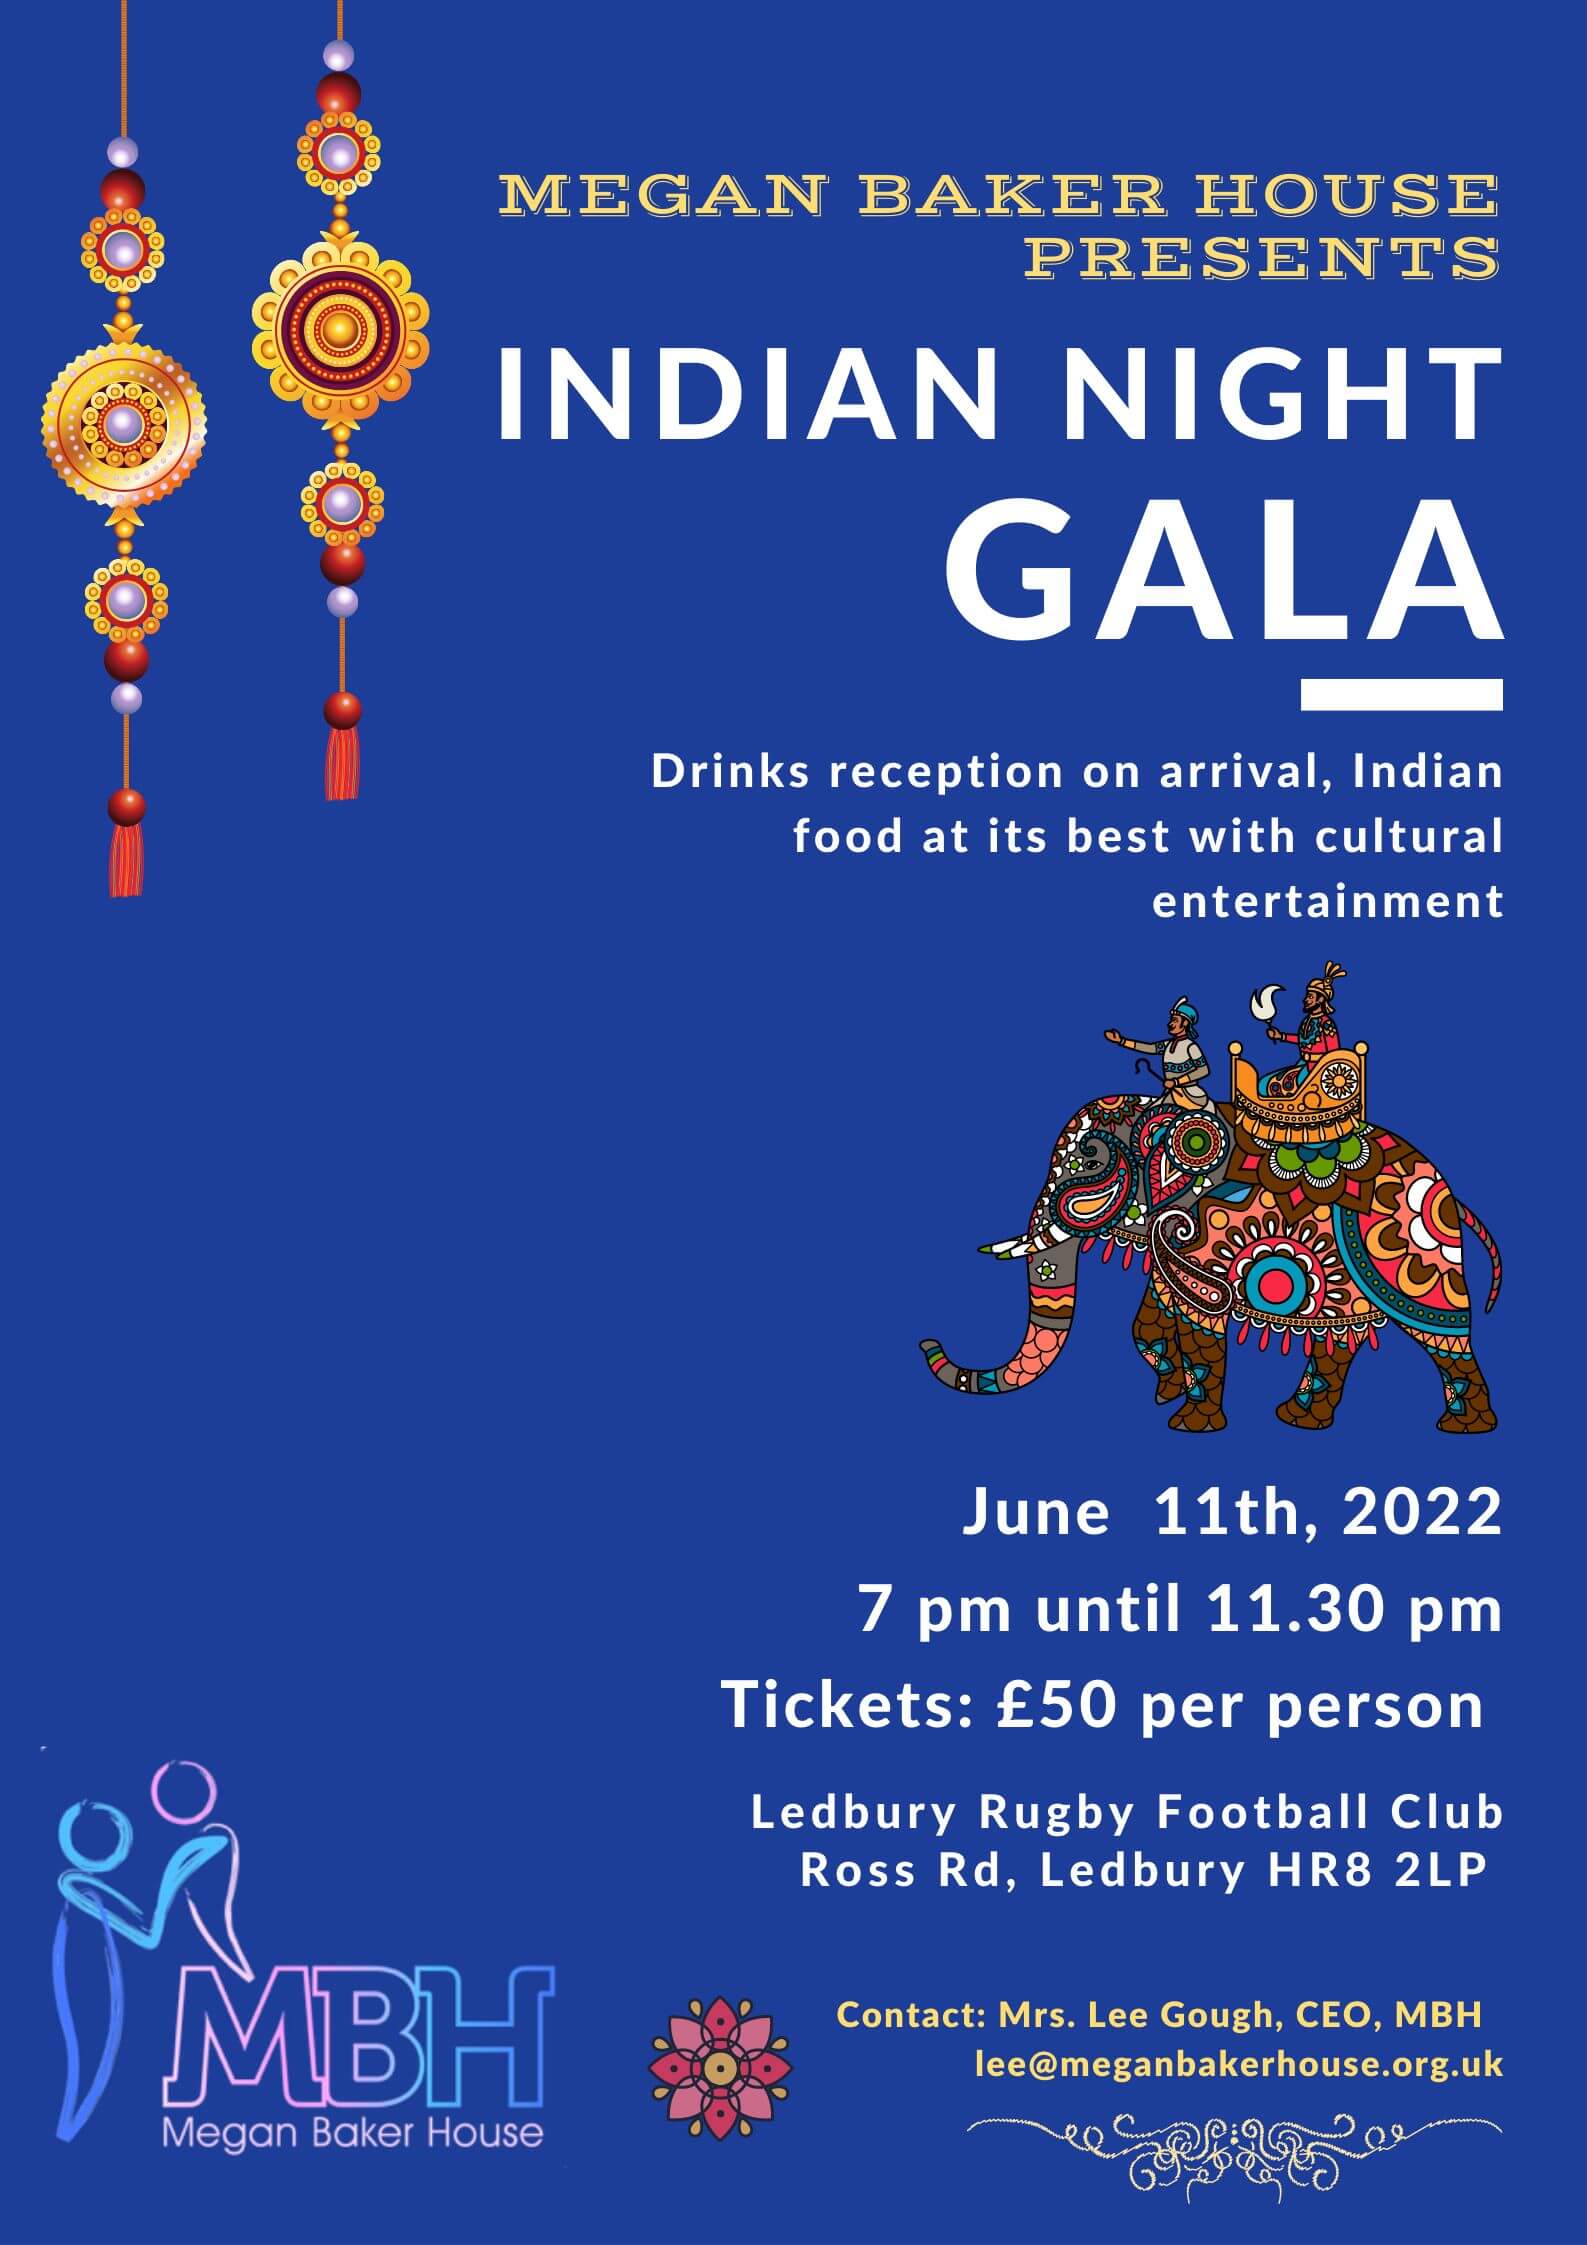 Indian Night Gala for Megan Baker House